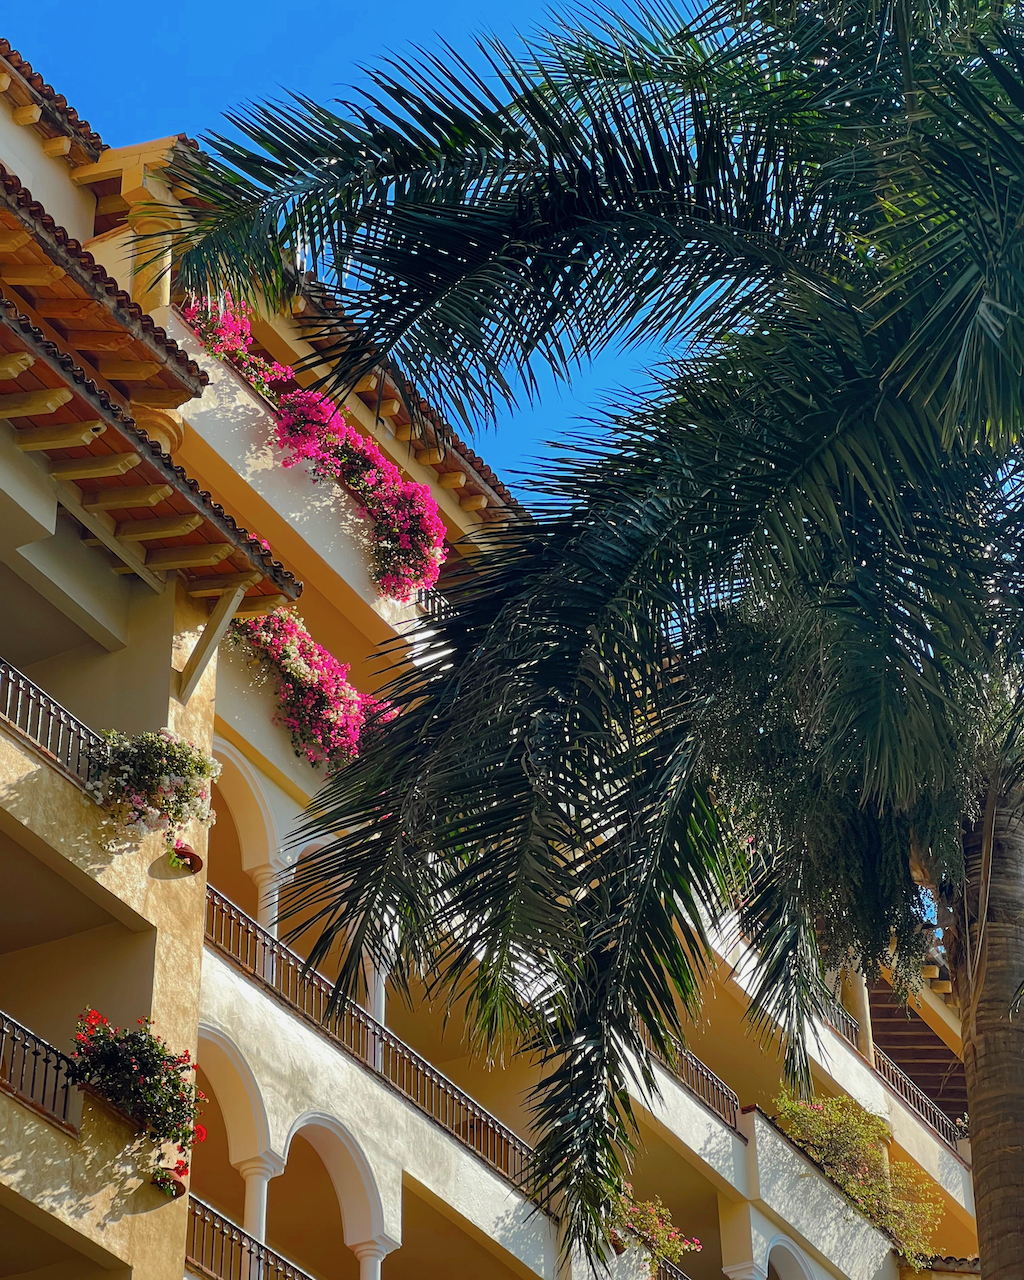 The Best All Inclusive Resort In Puerto Vallarta, Mexico